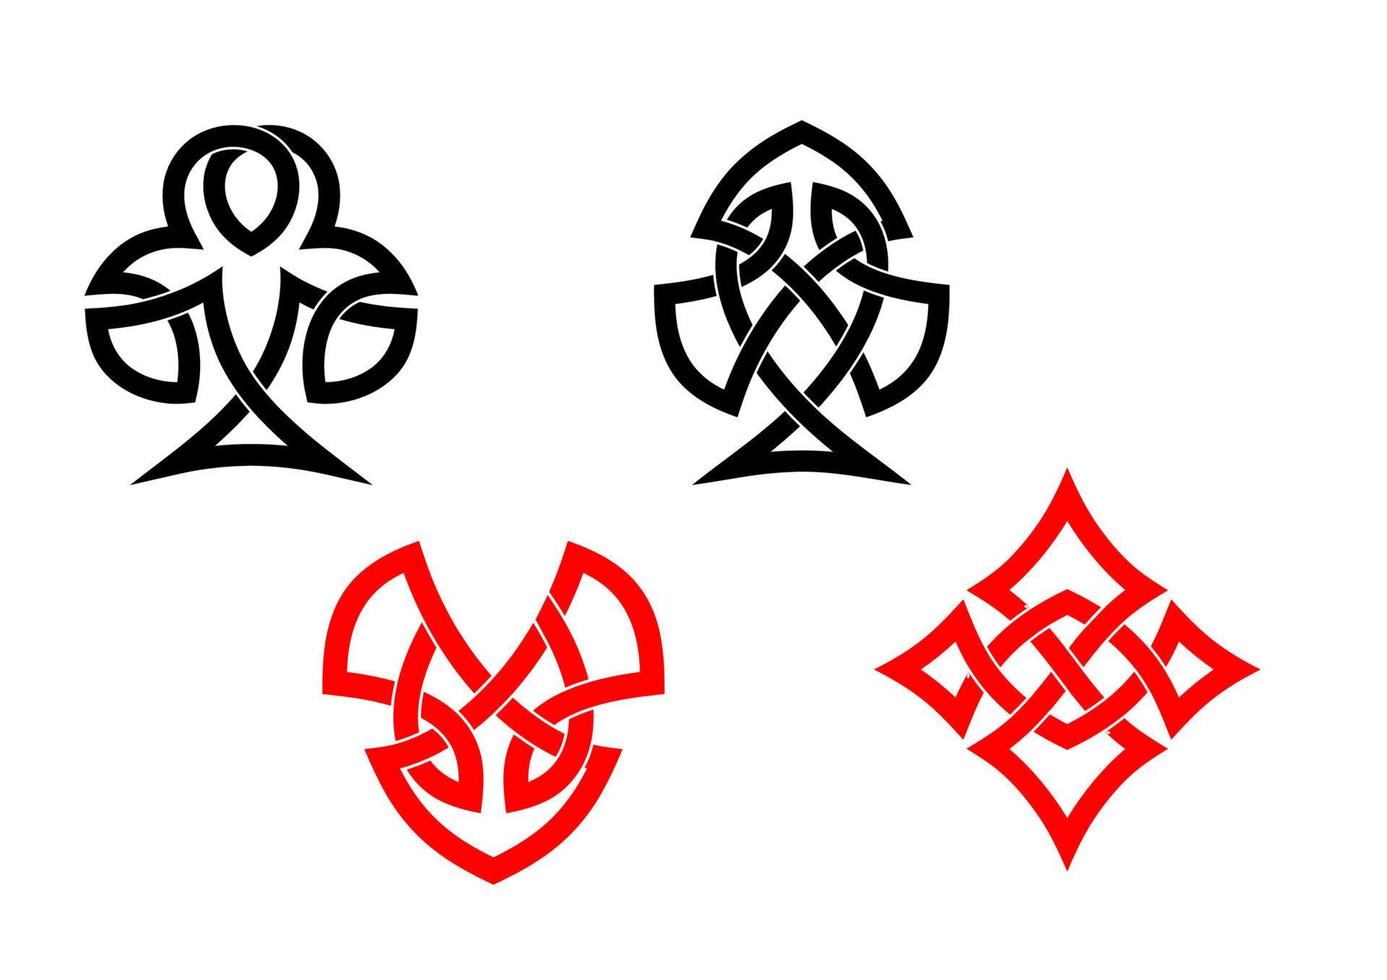 Pokerkartensymbole im keltischen Stil vektor